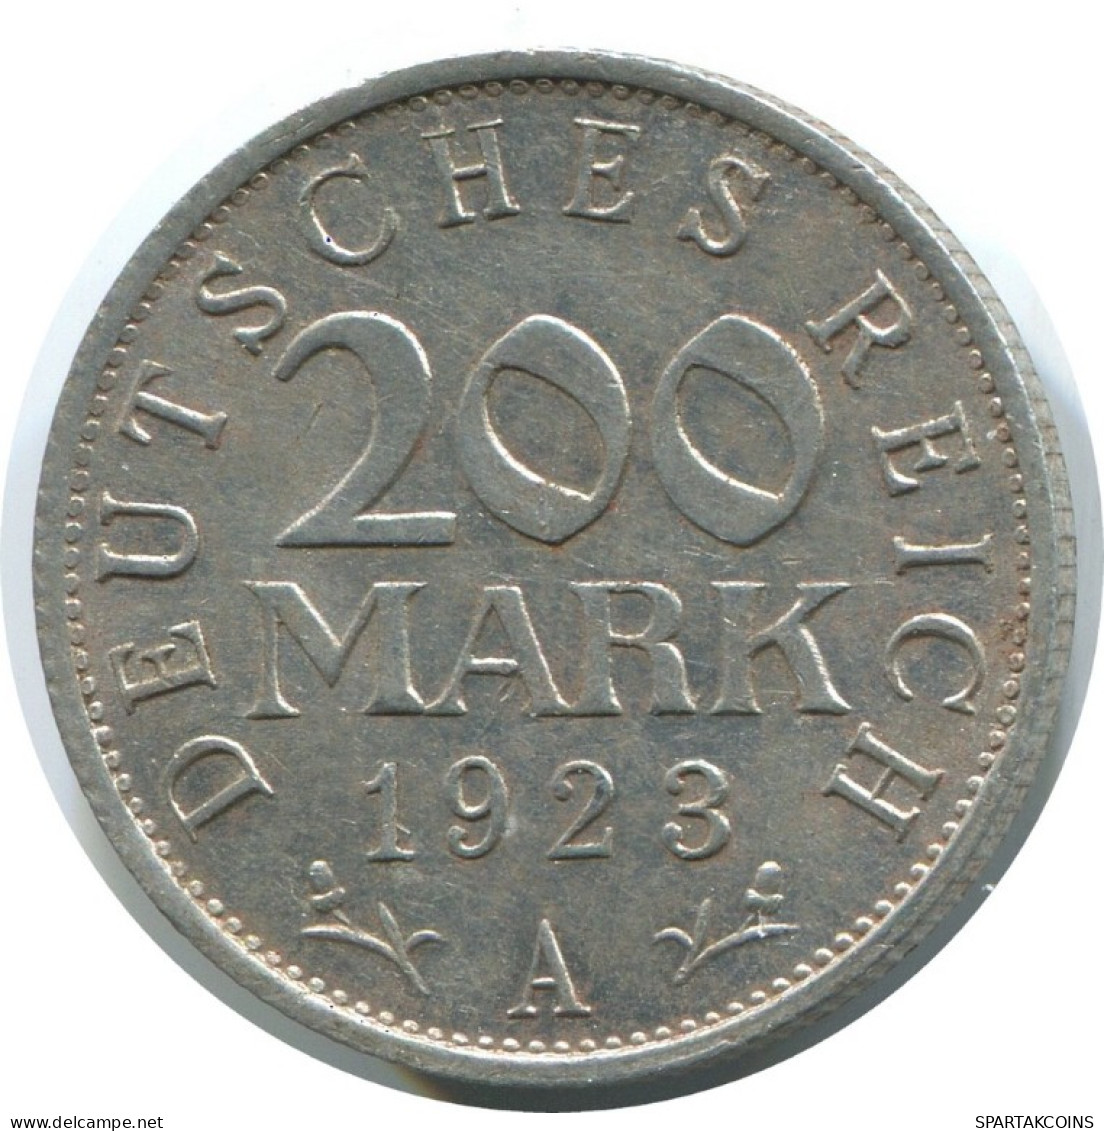 200 MARK 1923 A GERMANY Coin #AD687.9.U.A - 200 & 500 Mark